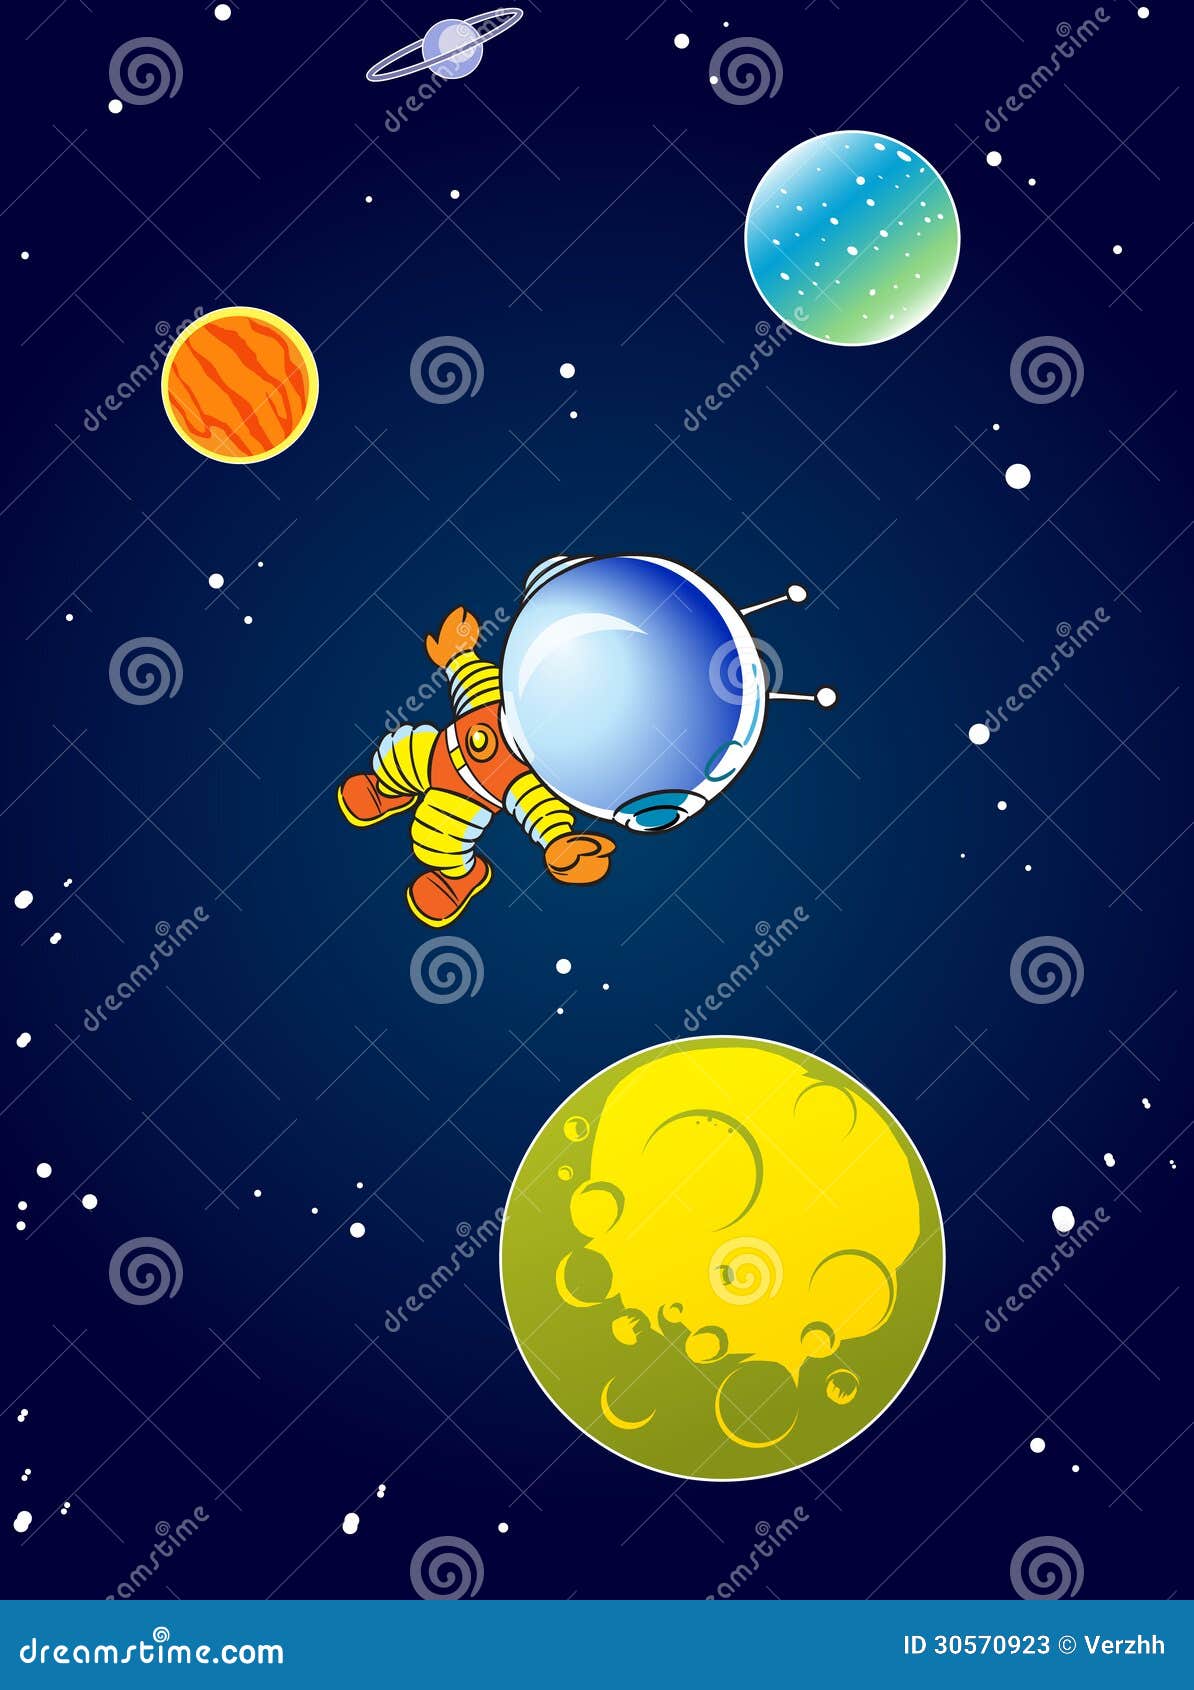 Cartoon astronaut stock vector. Illustration of stratosphere - 30570923